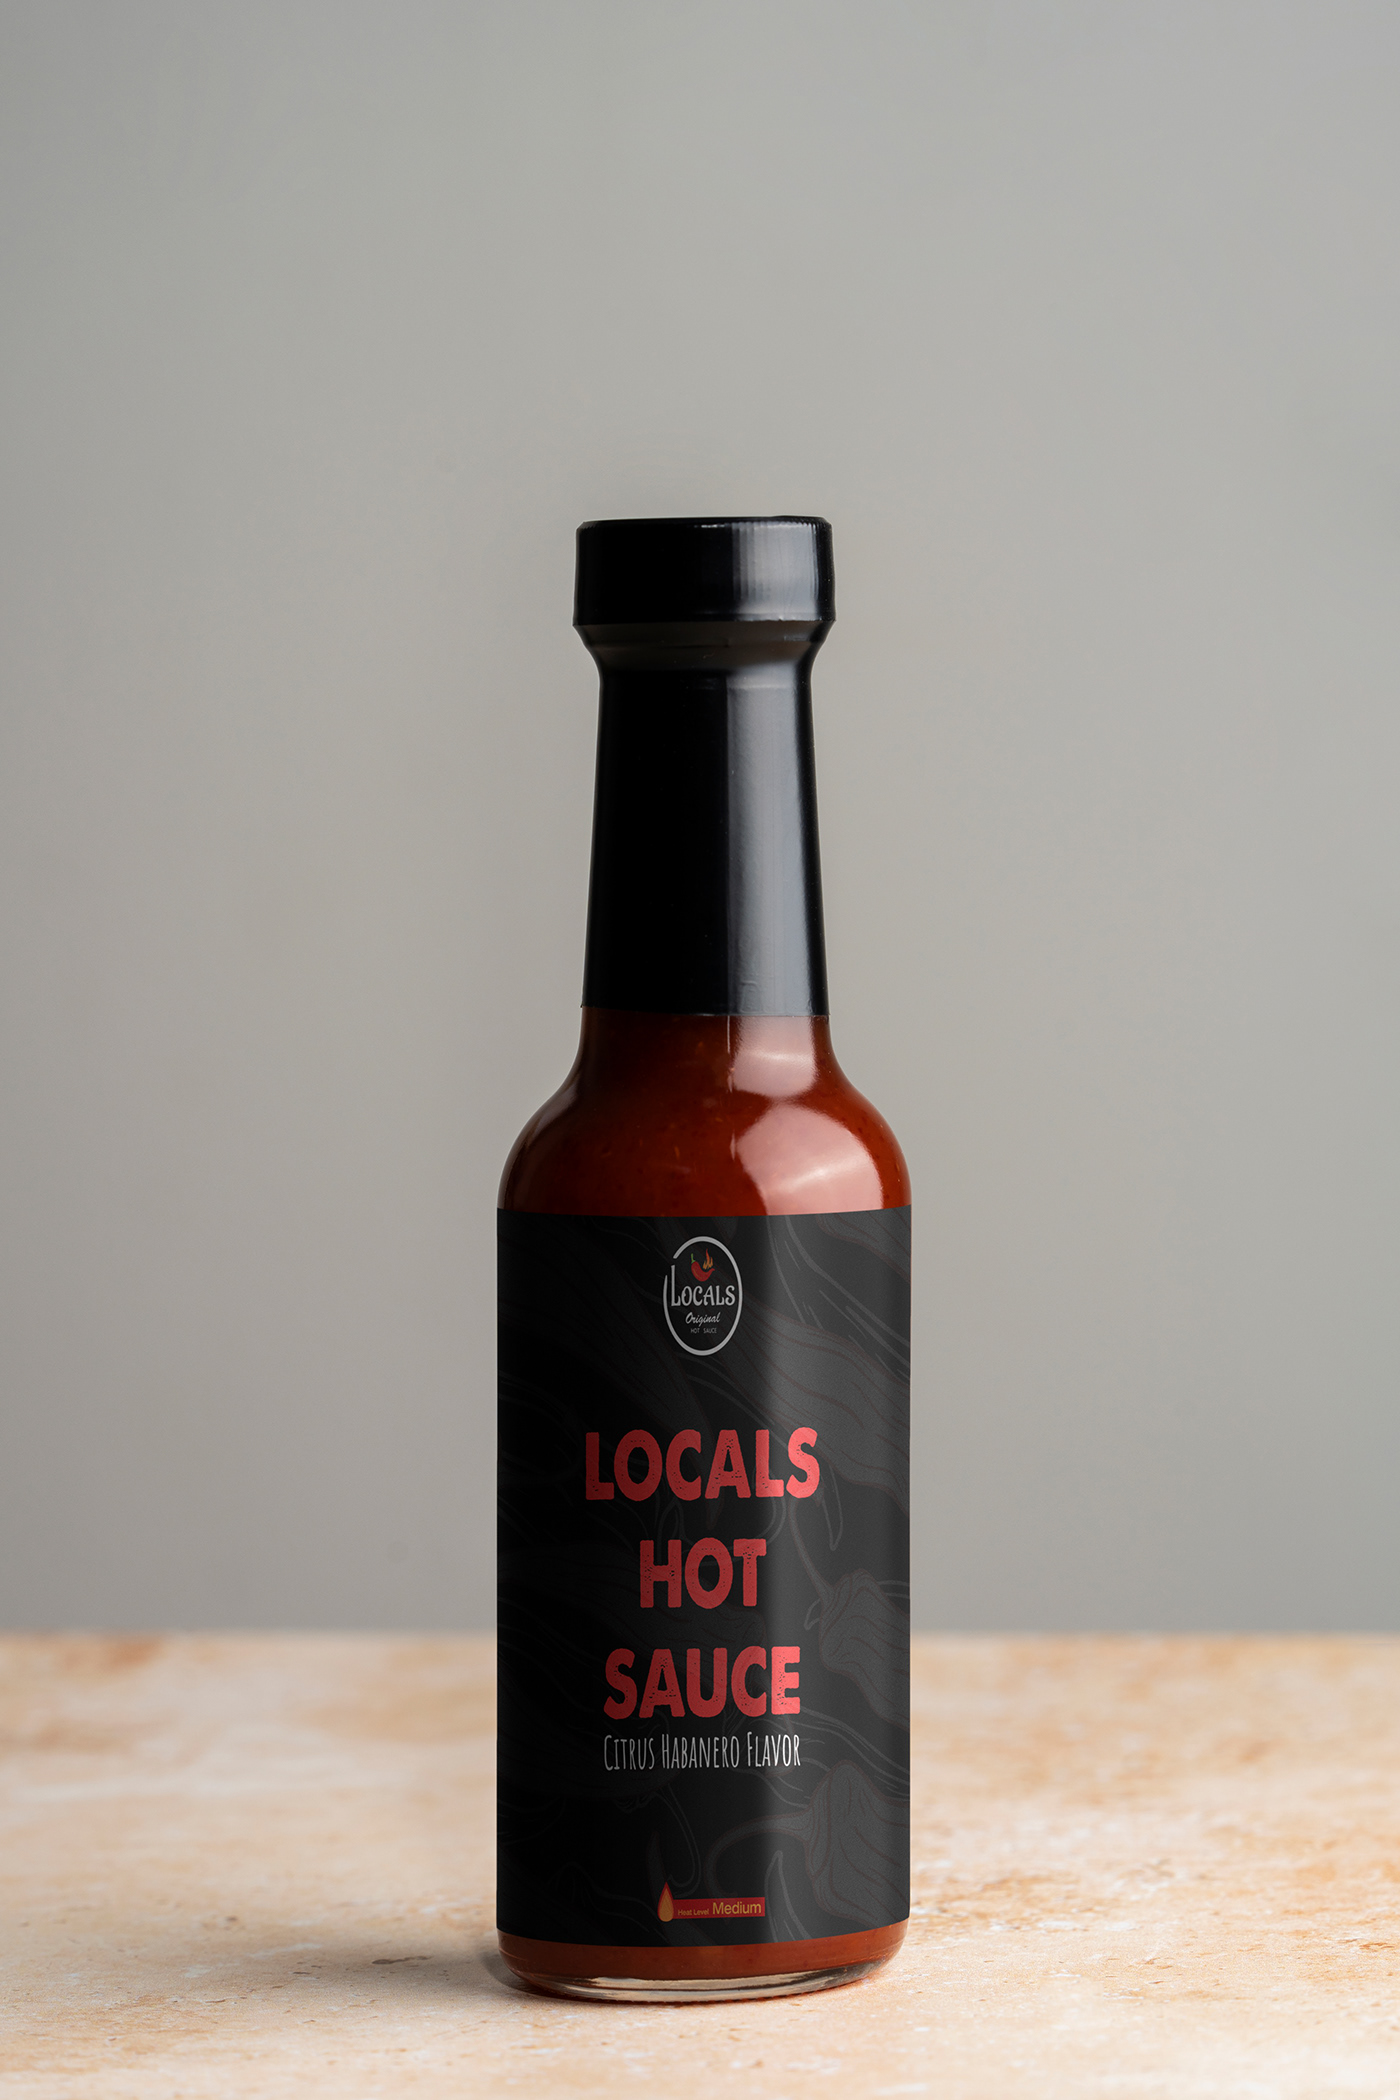 Label lebal design packaging design Packaging hot sauce hot sauce label Hot sauce packaging hot sauce design Locals Hot Sauce Locals Hot Sauce label